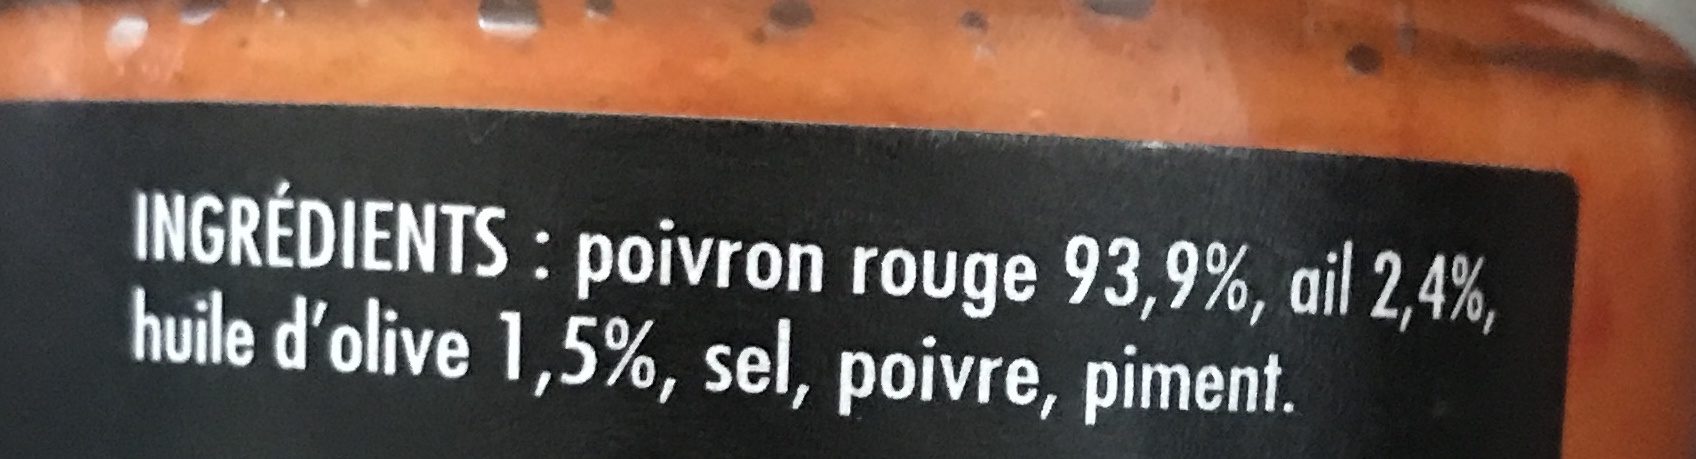 Poivron rouge a l’huile d’olive - Ingredients - fr